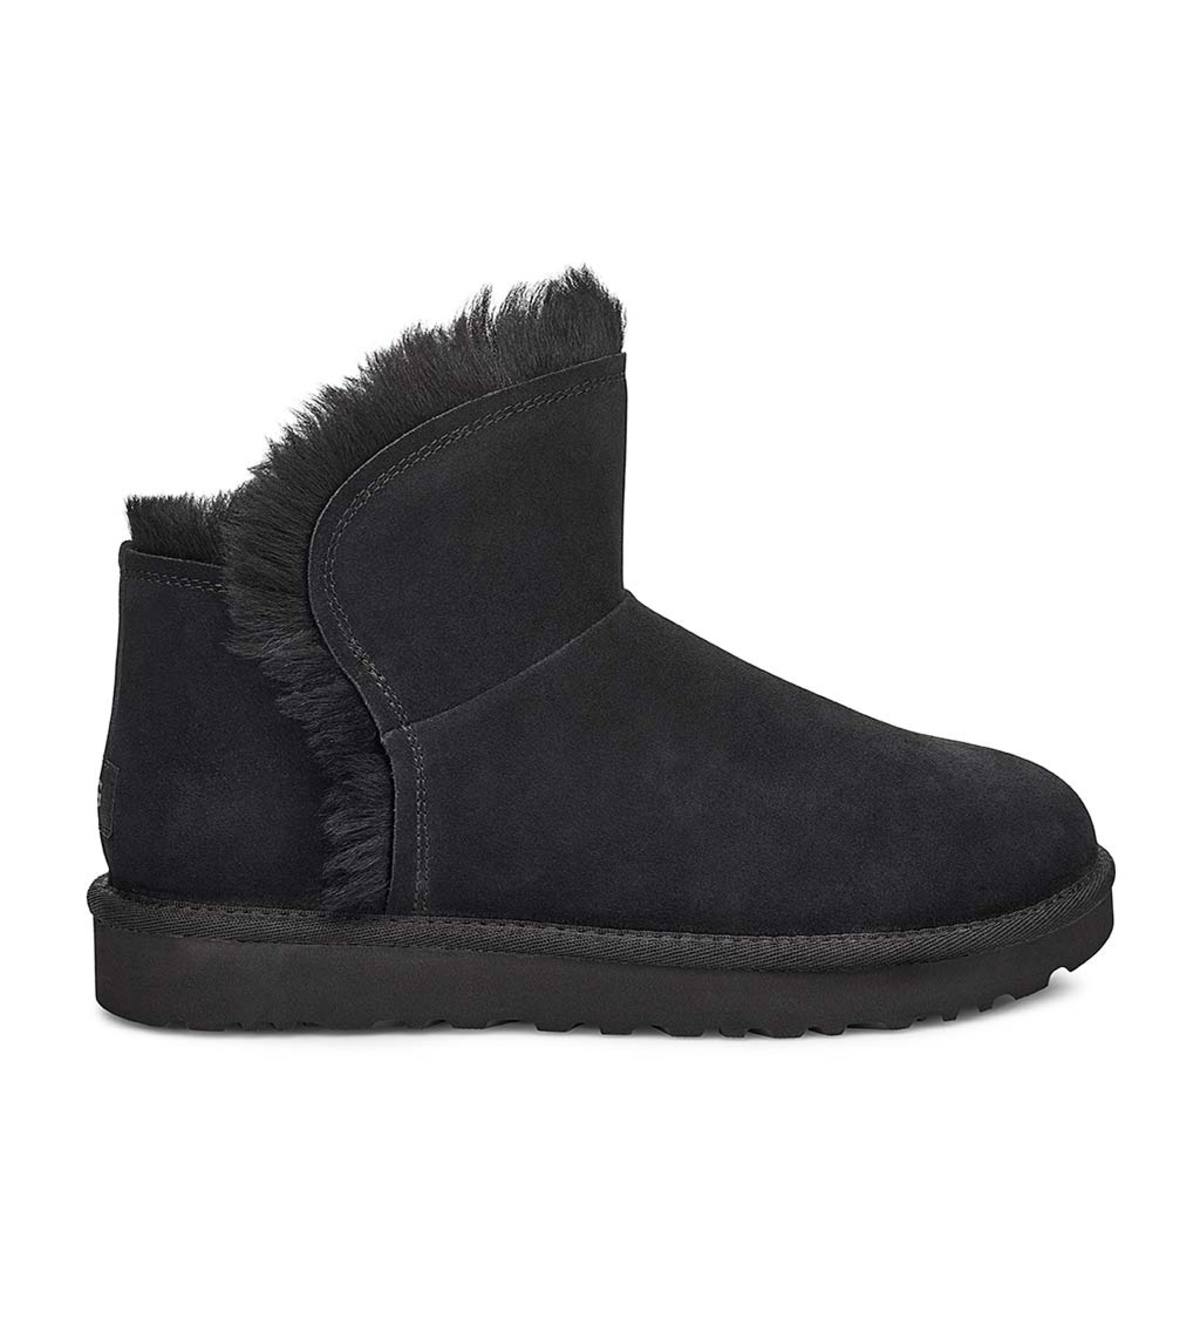 black ugg boots size 6